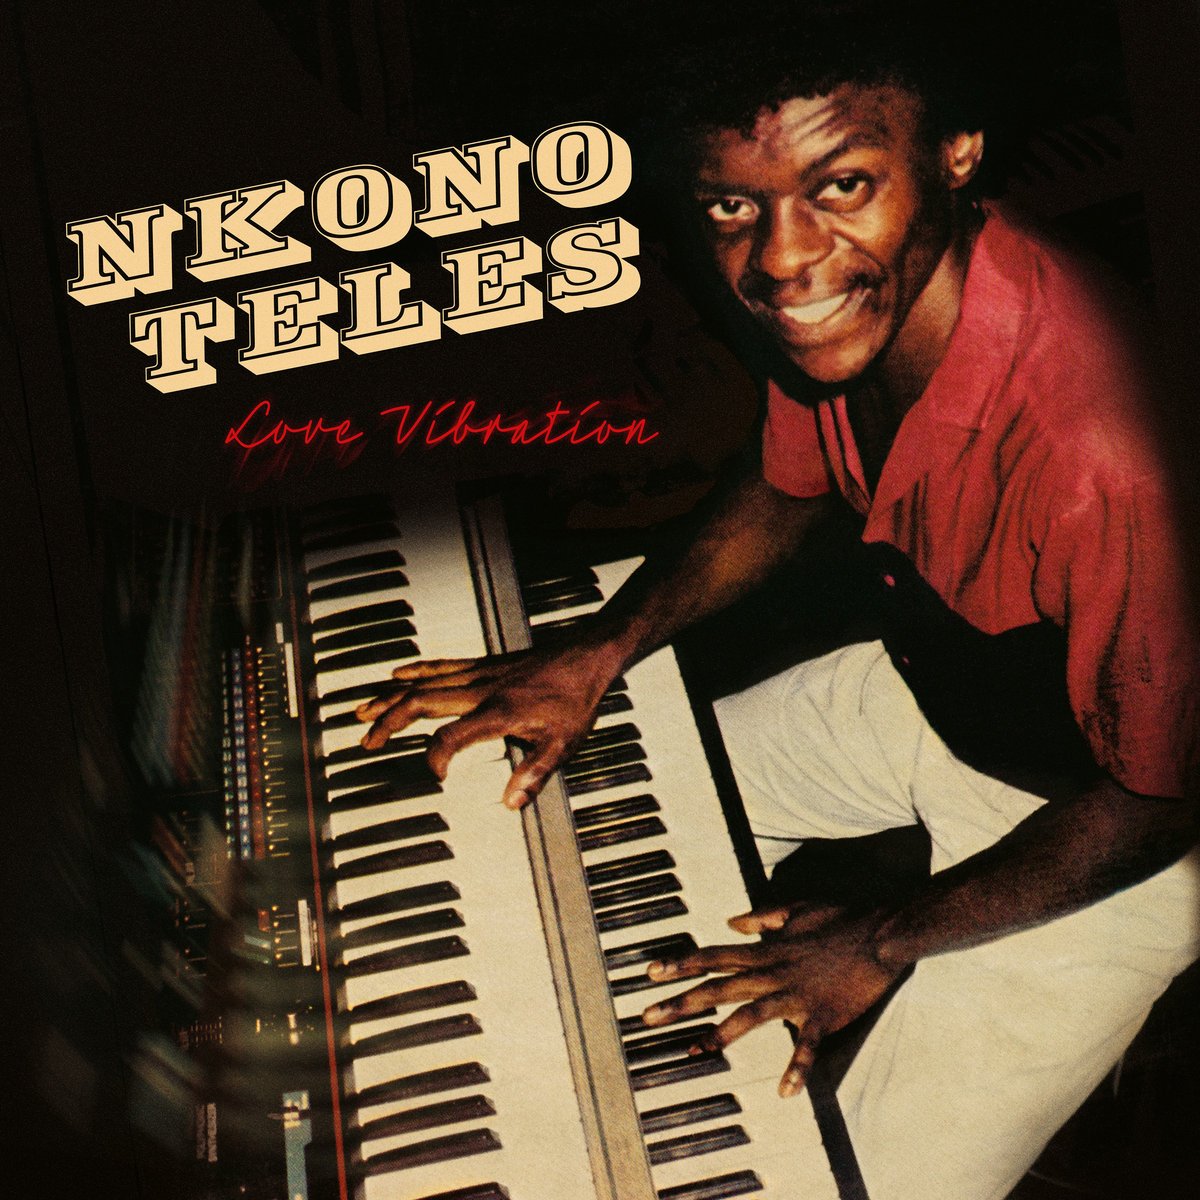 Teles, Nkono "Love Vibration"